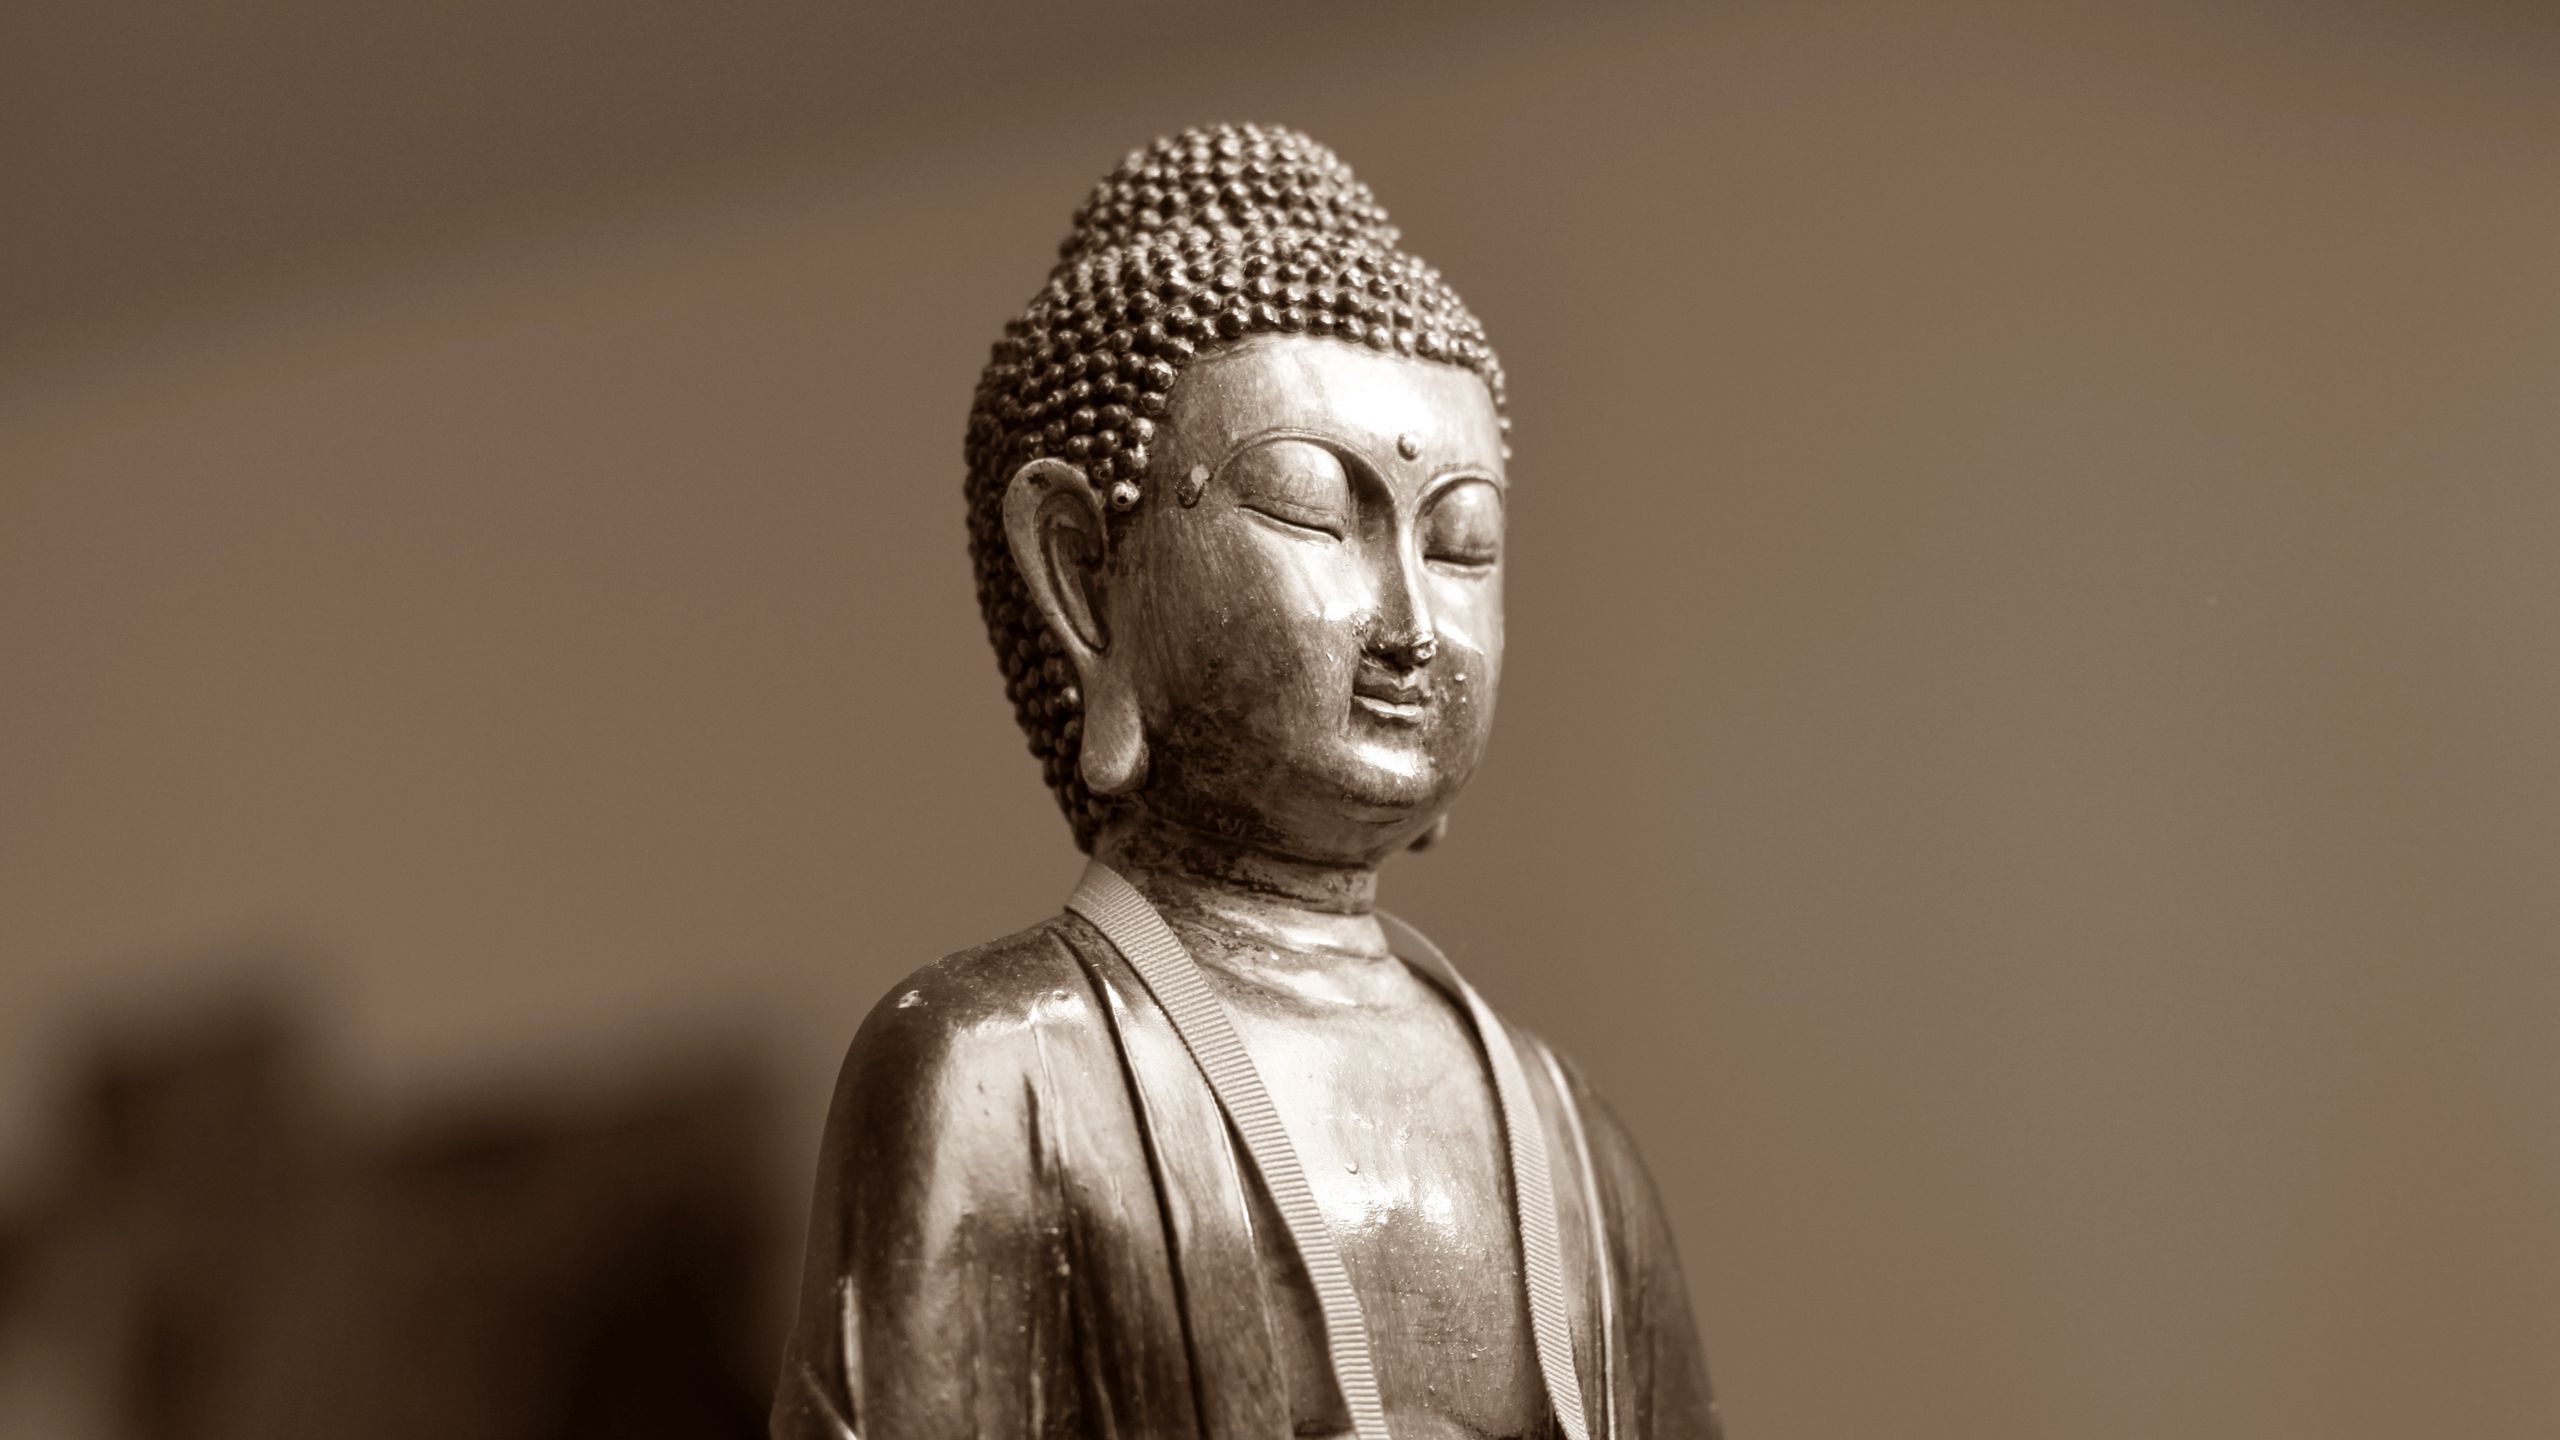 Download wallpaper 2560x1440 buddha, meditation, east, figurine widescreen 16:9 HD background